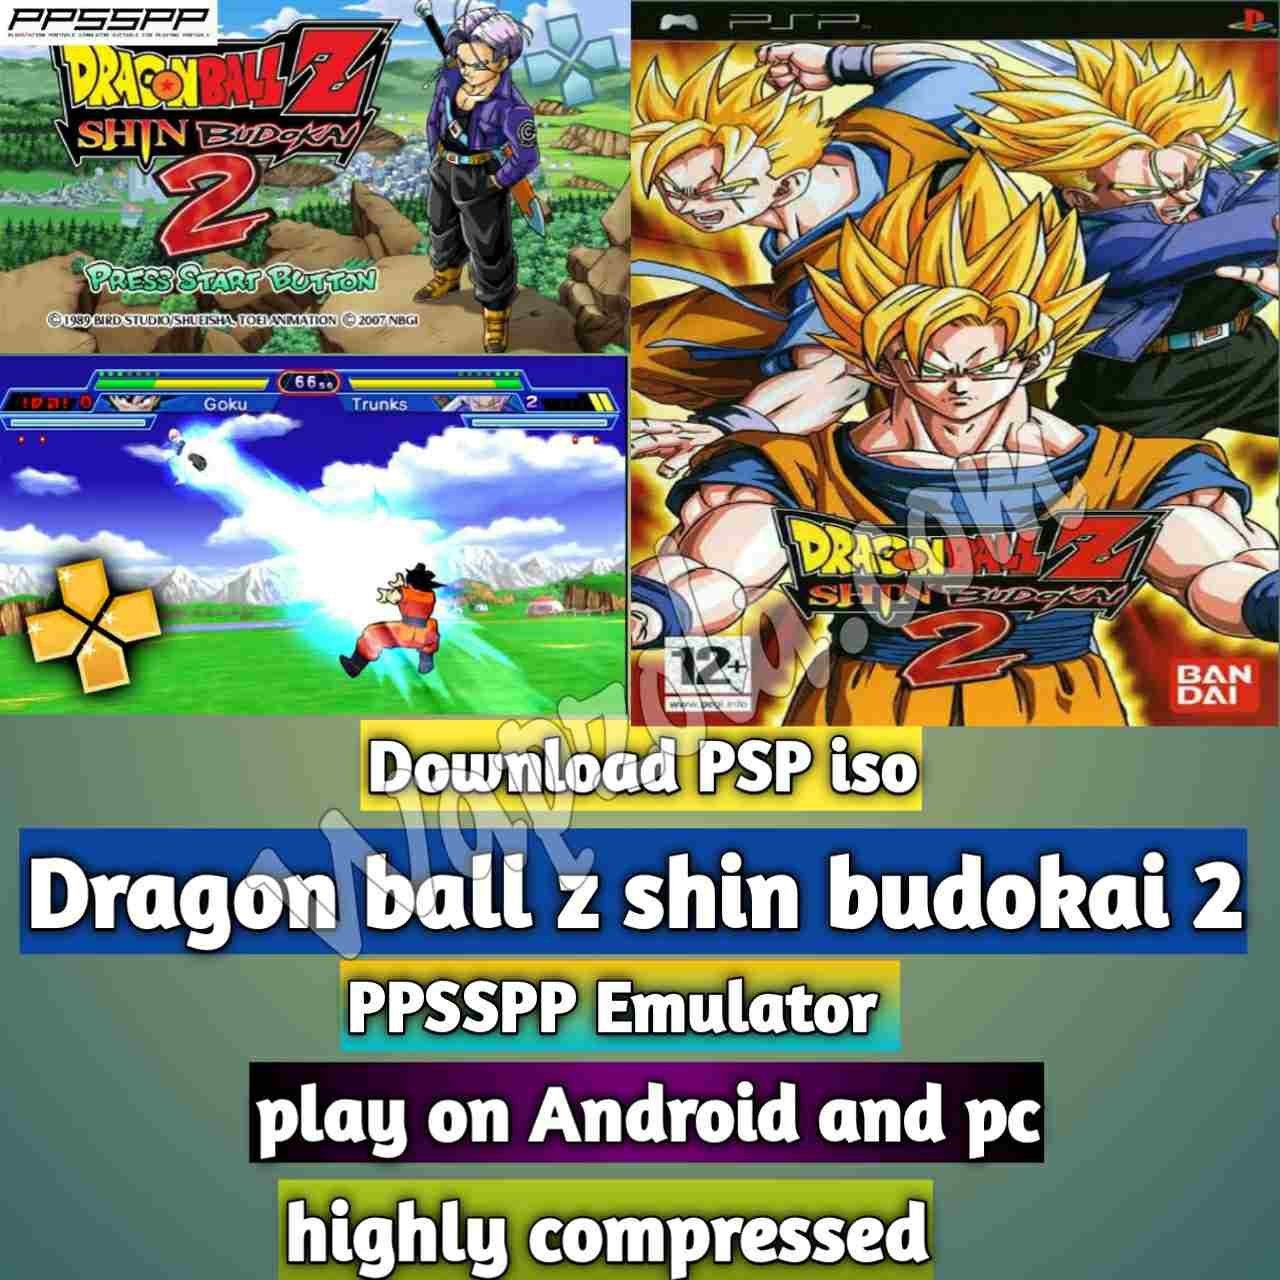 [Télécharger] Dragon ball z shin budokai 2 iso ppsspp emulator - PSP APK Iso ROM hautement compressé 300MB 3